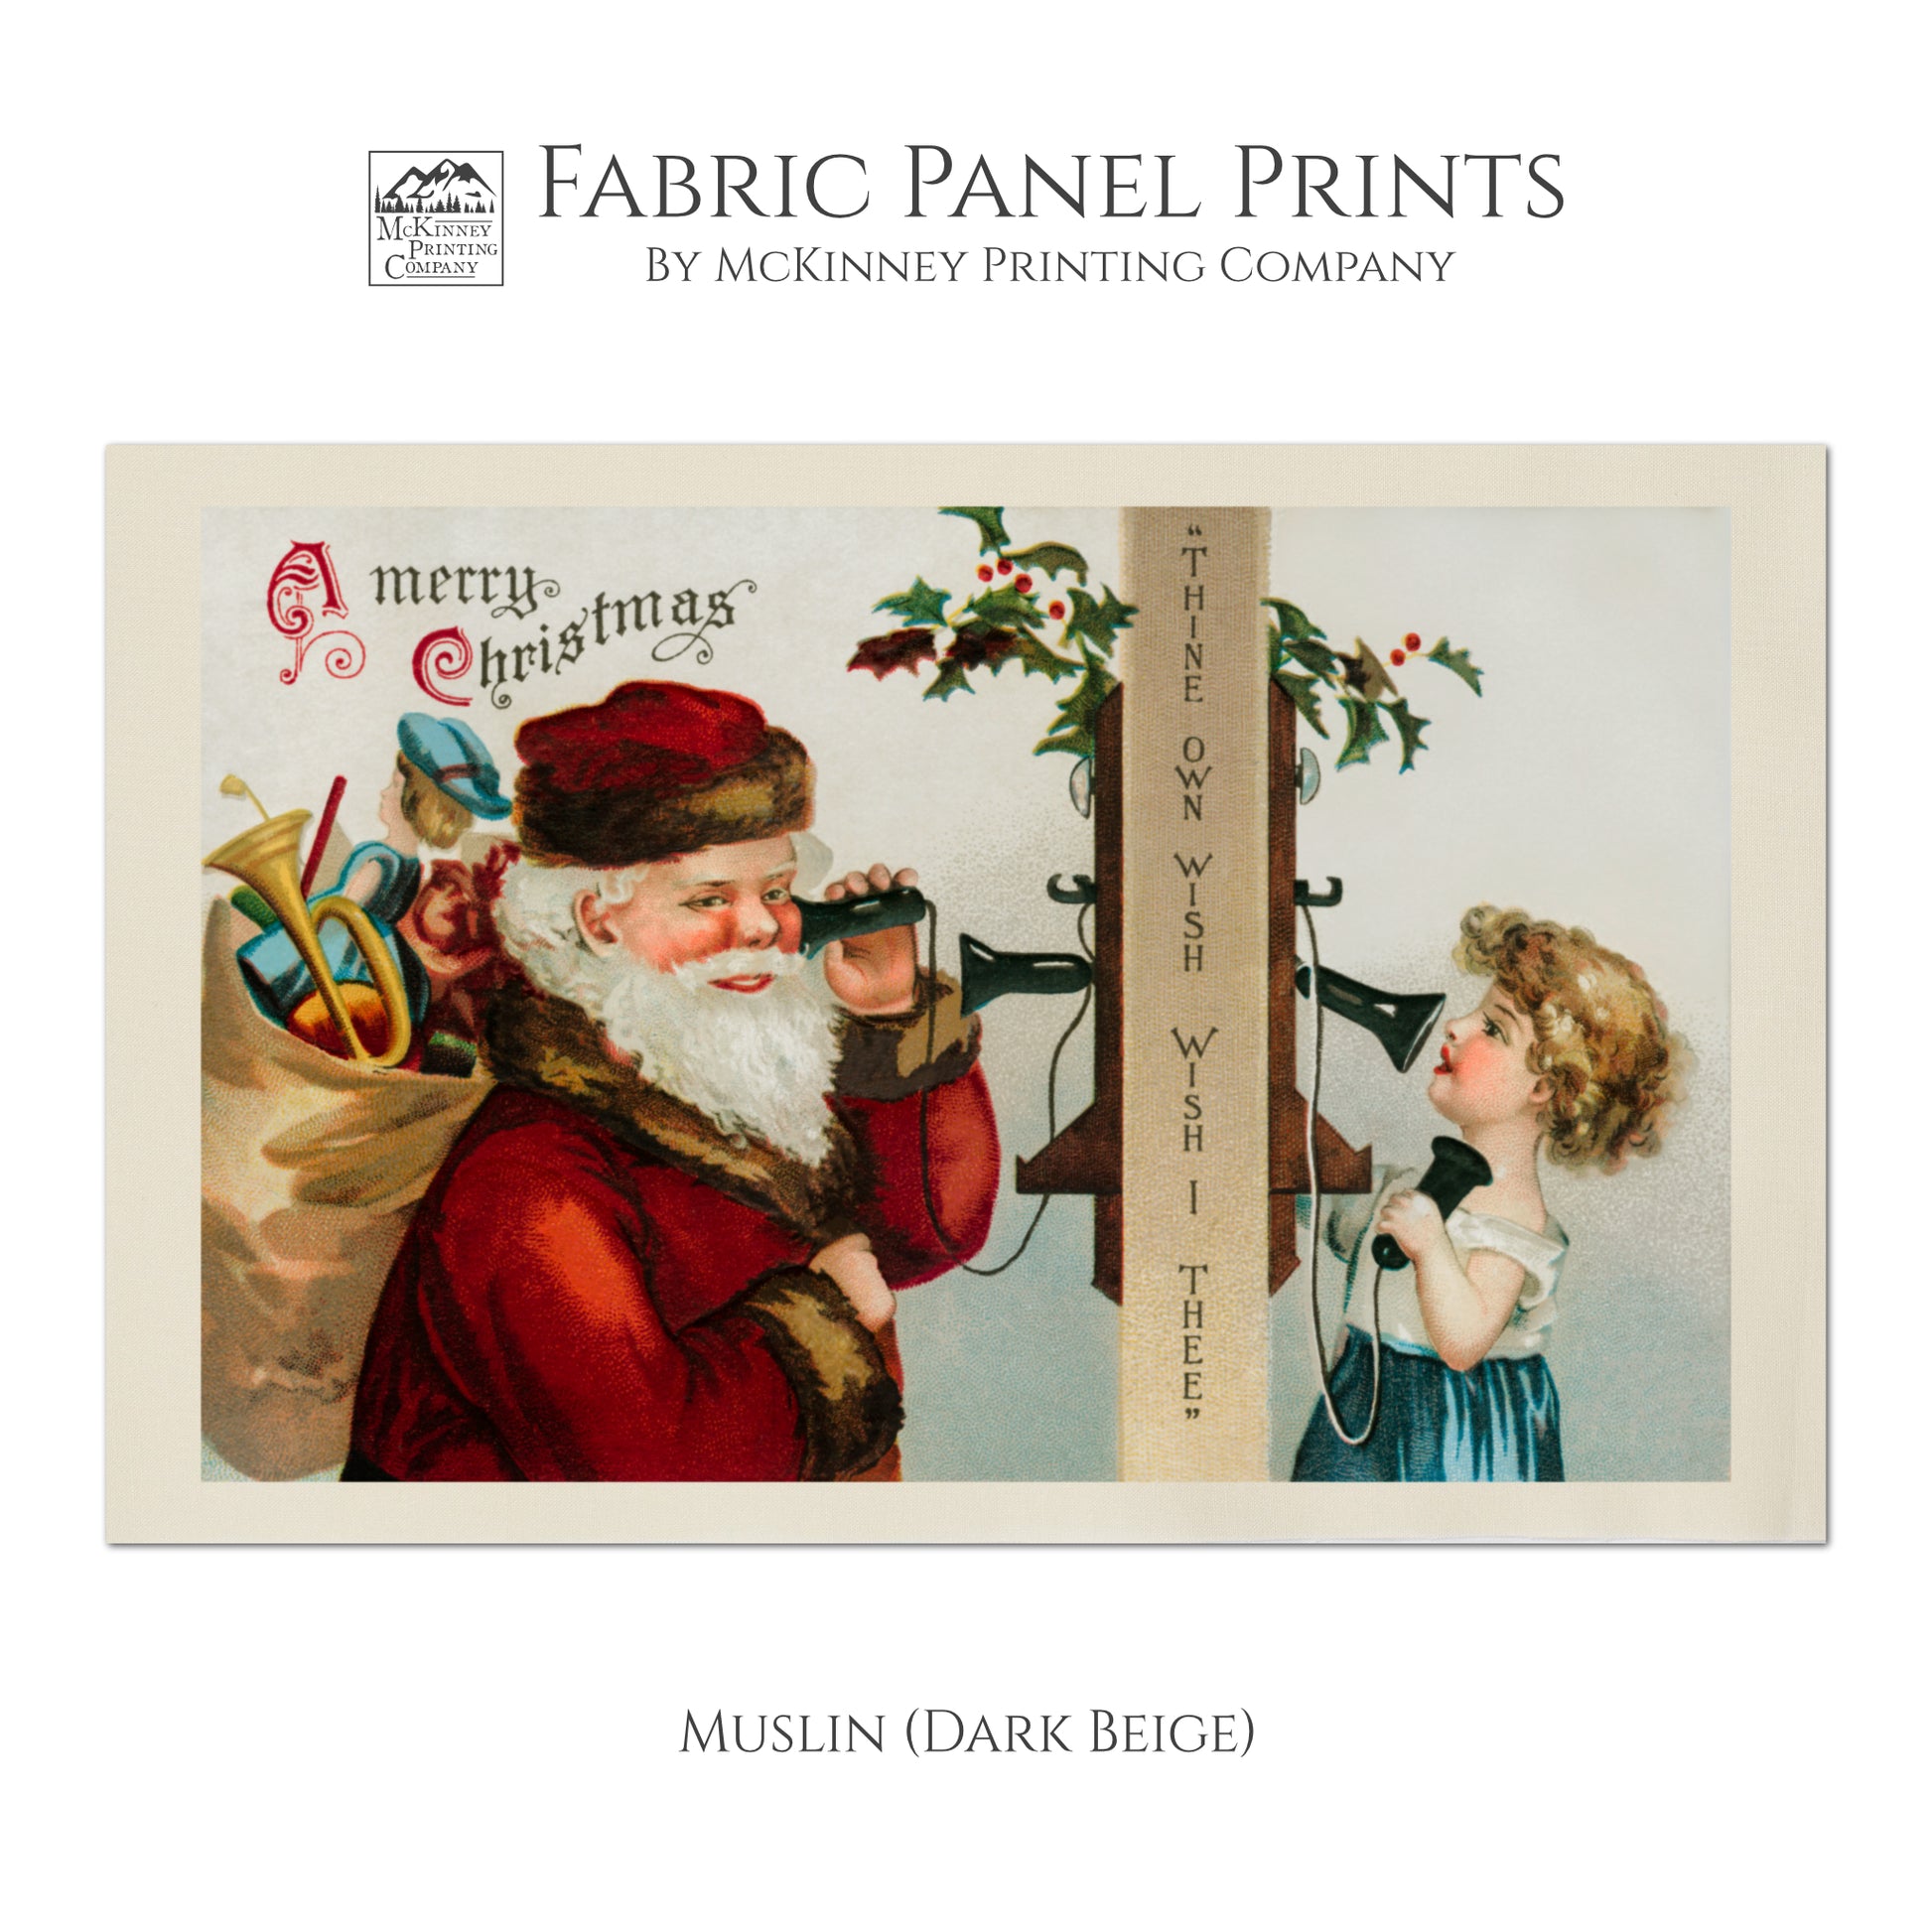 Vintage Santa, Christmas Fabric Panel, Victorian Decor, Antique, Vintage, Fabric Panel Print - Muslin